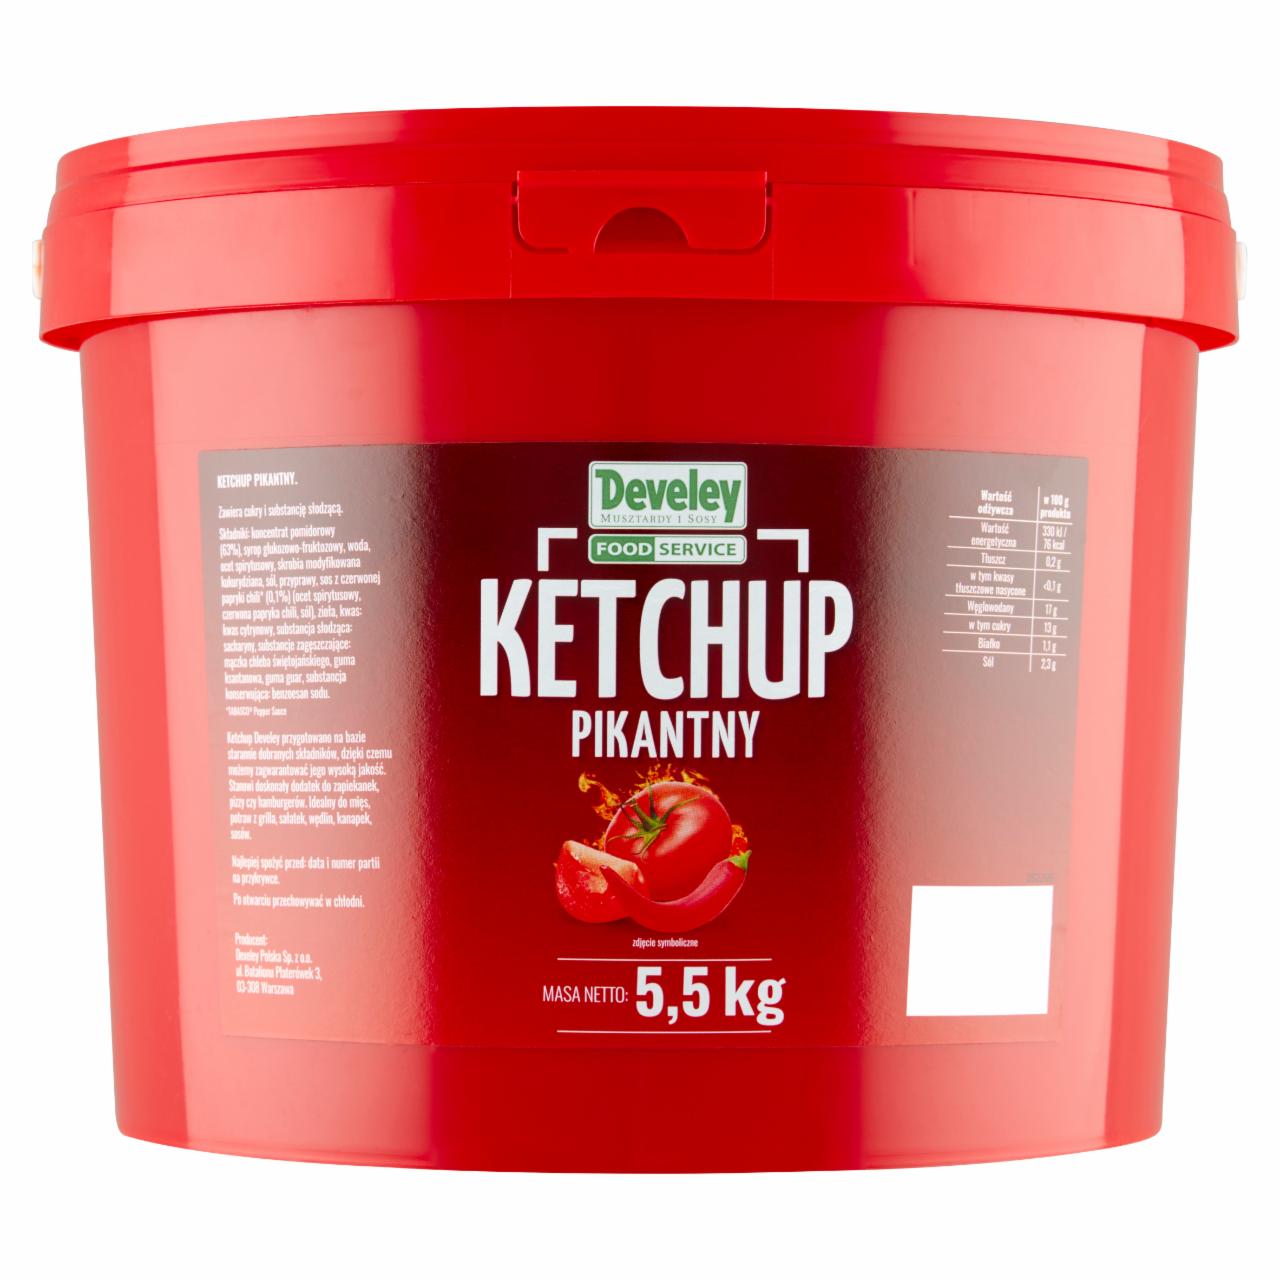 Zdjęcia - Develey Food Service Ketchup pikantny 5,5 kg